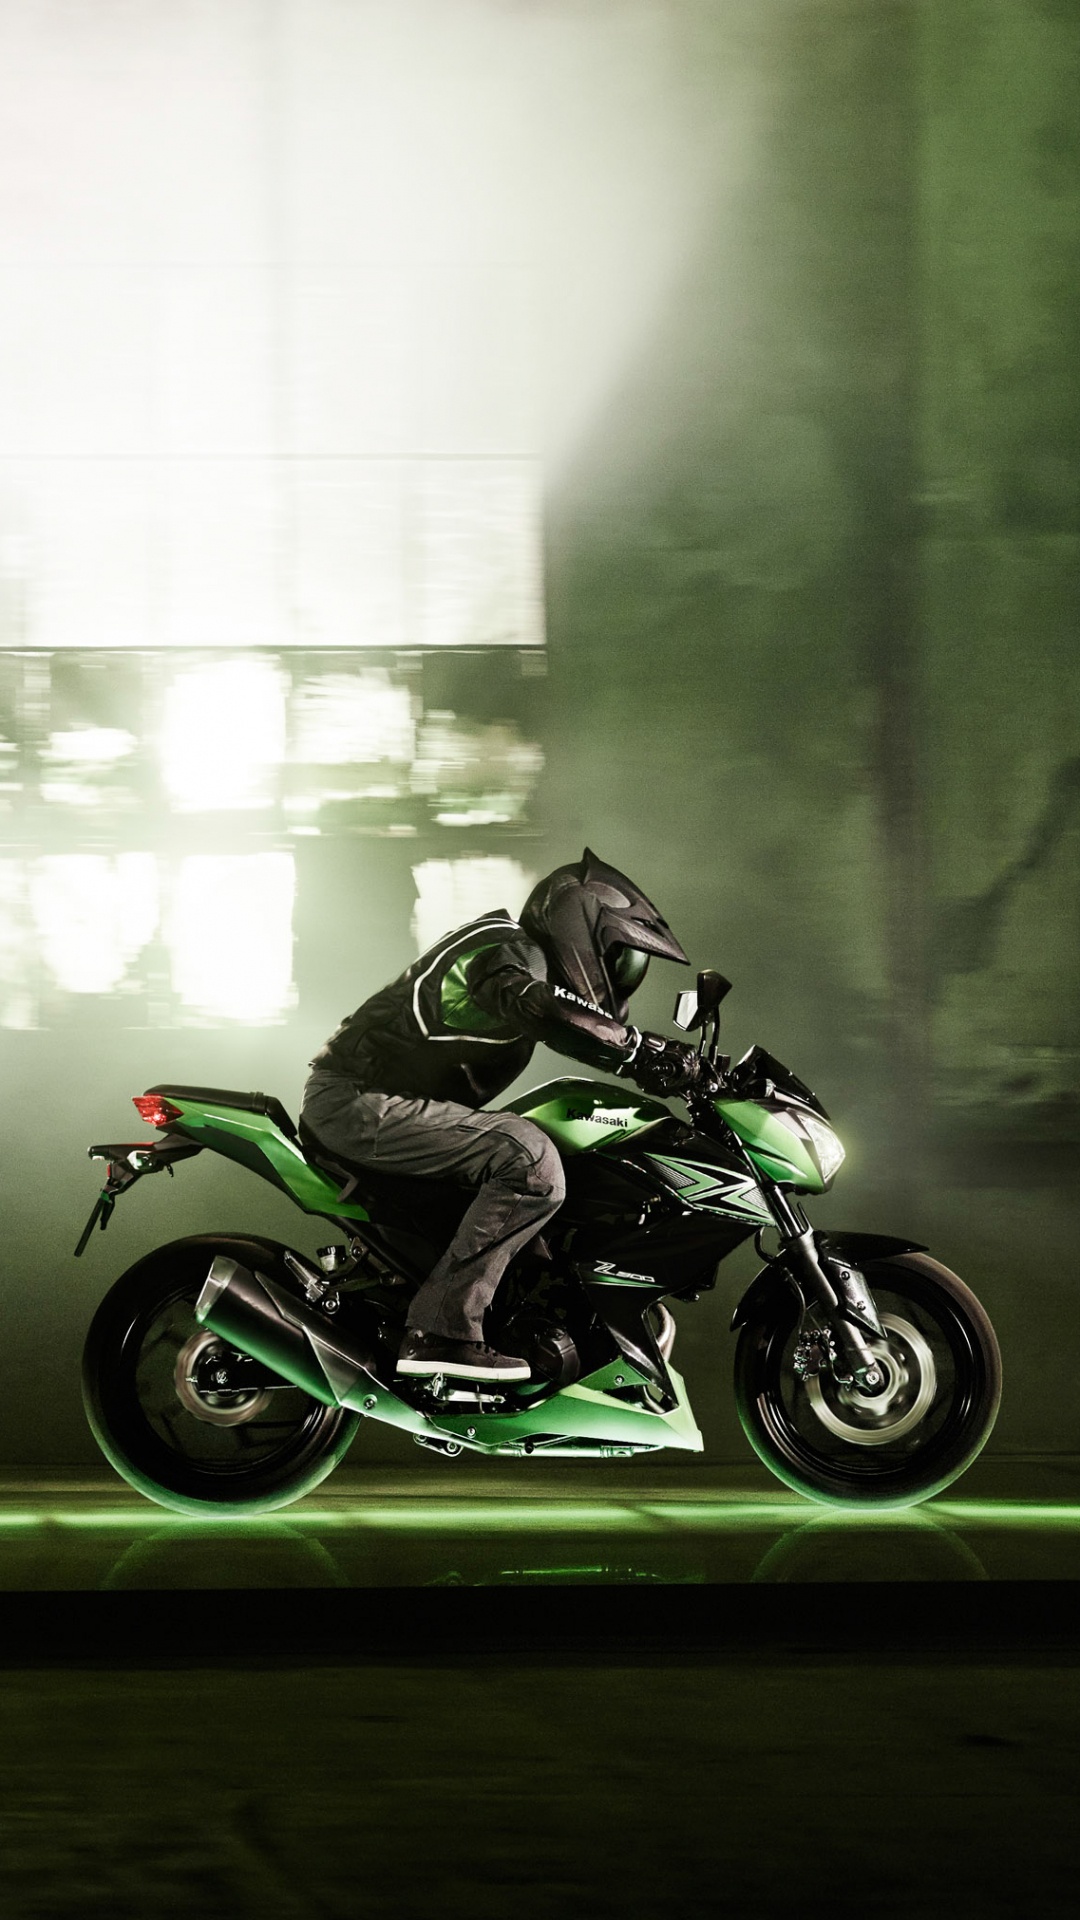 Kawasaki Ninja H2® | Hypersport Motorcycle | Supercharged Power